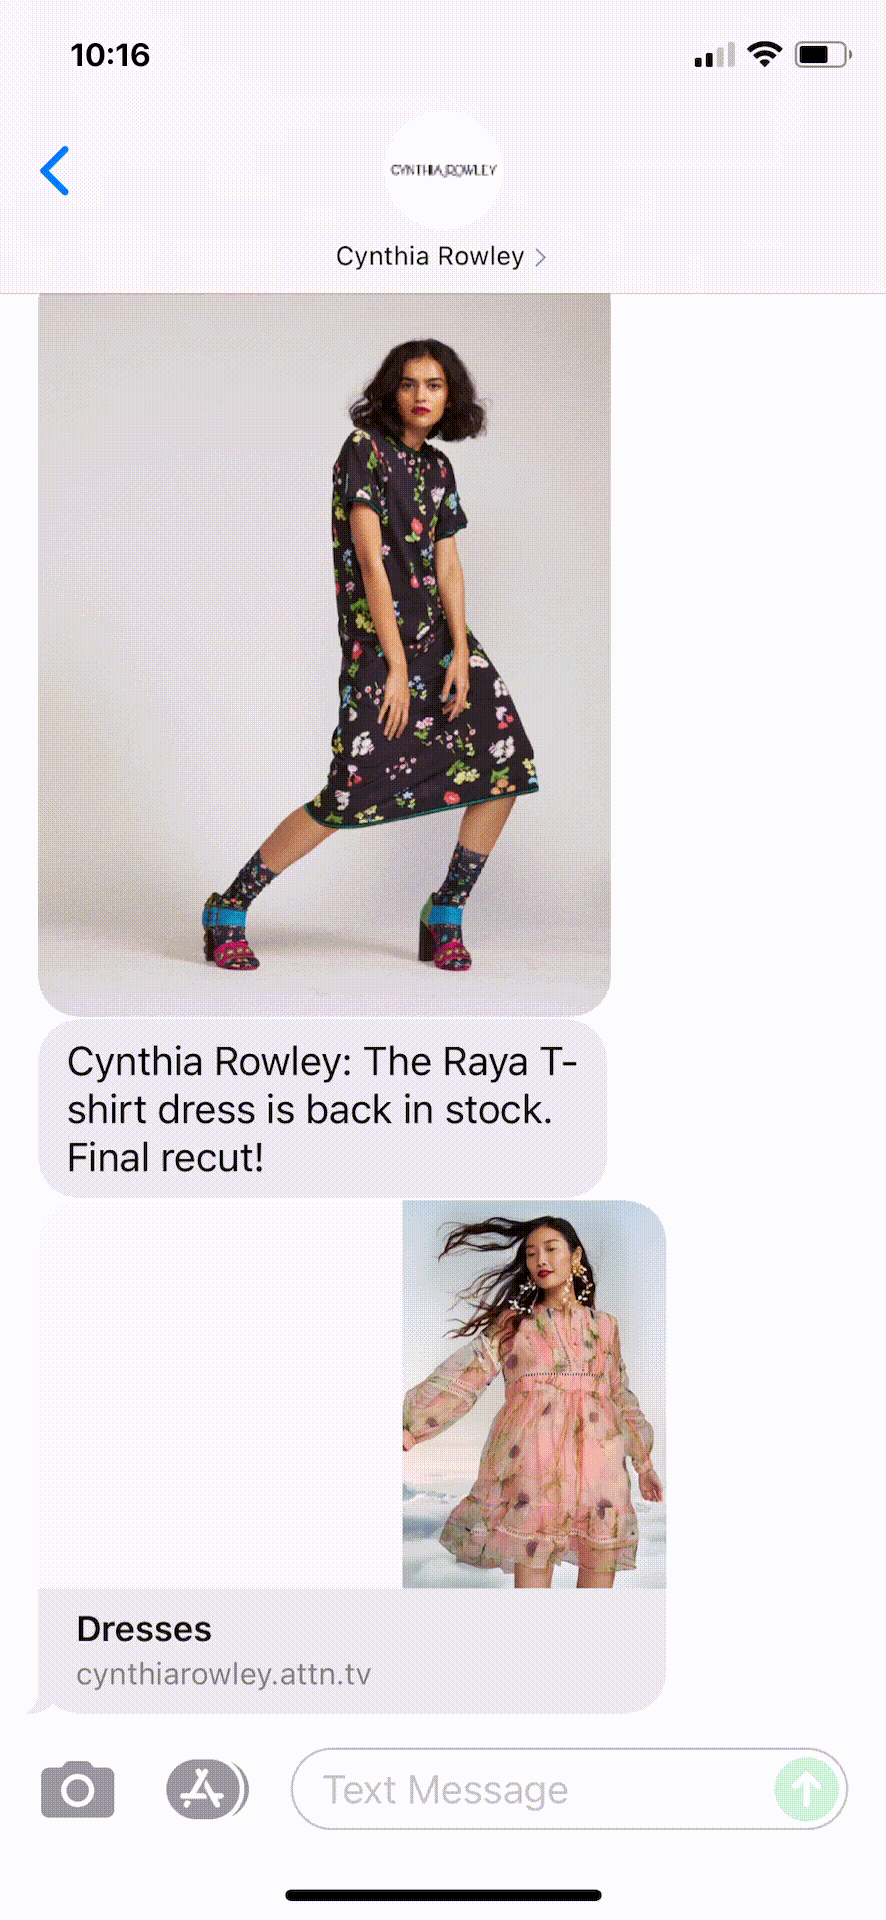 Cynthia-Rowley-Text-Message-Marketing-Example-06.15.2021